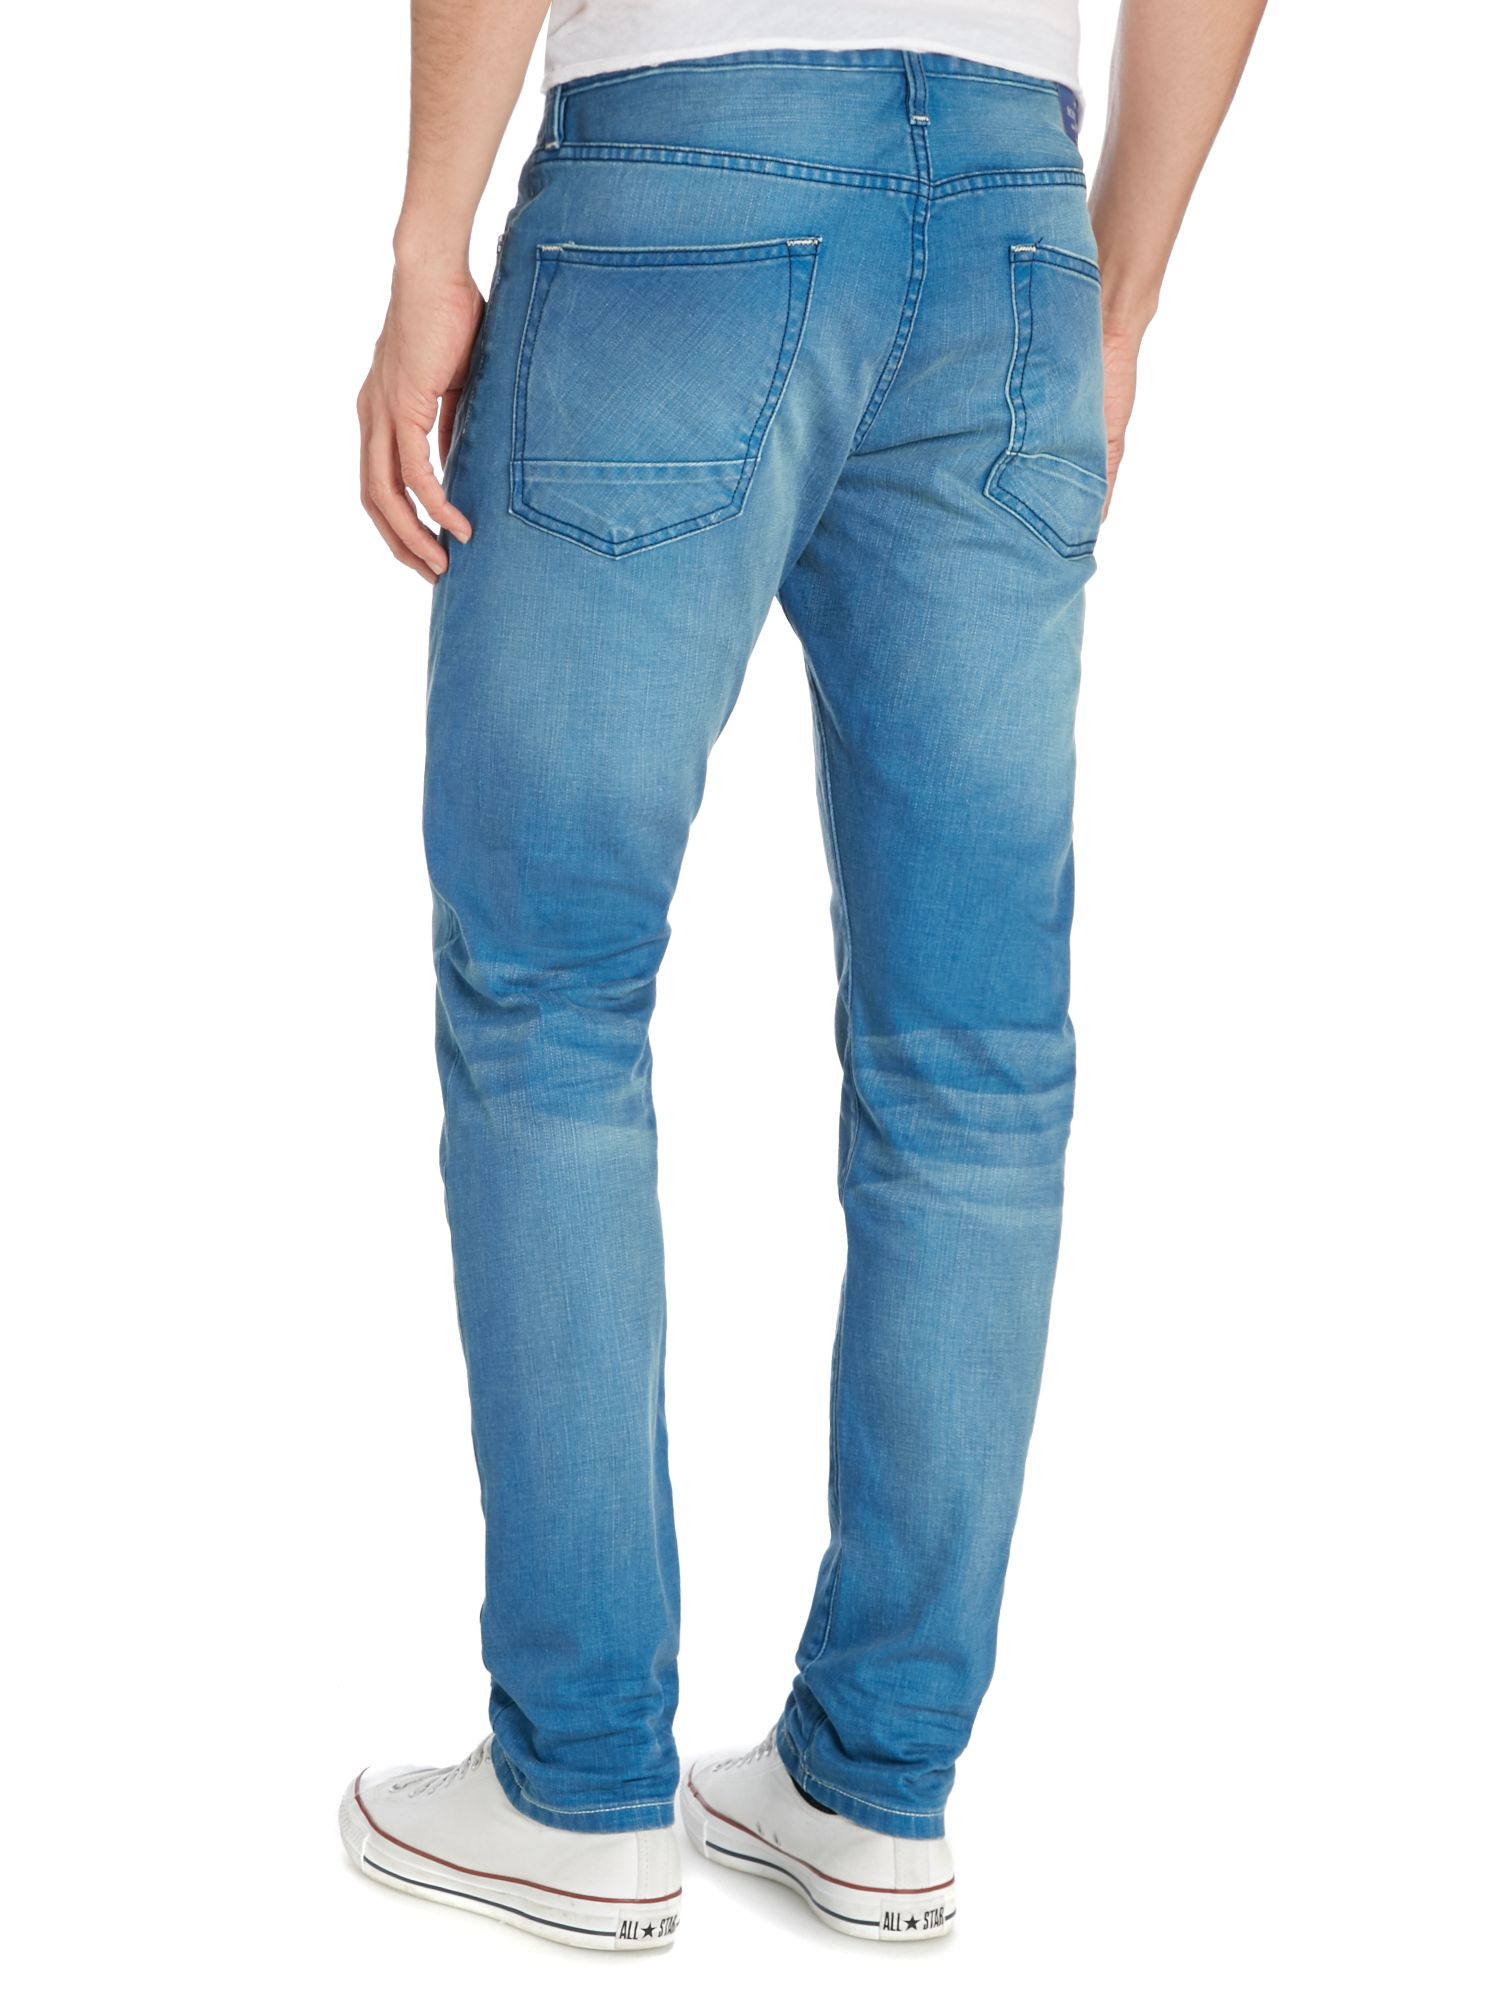 Lyst - Scotch & Soda Ralston - Summer Spirit Slim Fit Jeans in Blue for Men